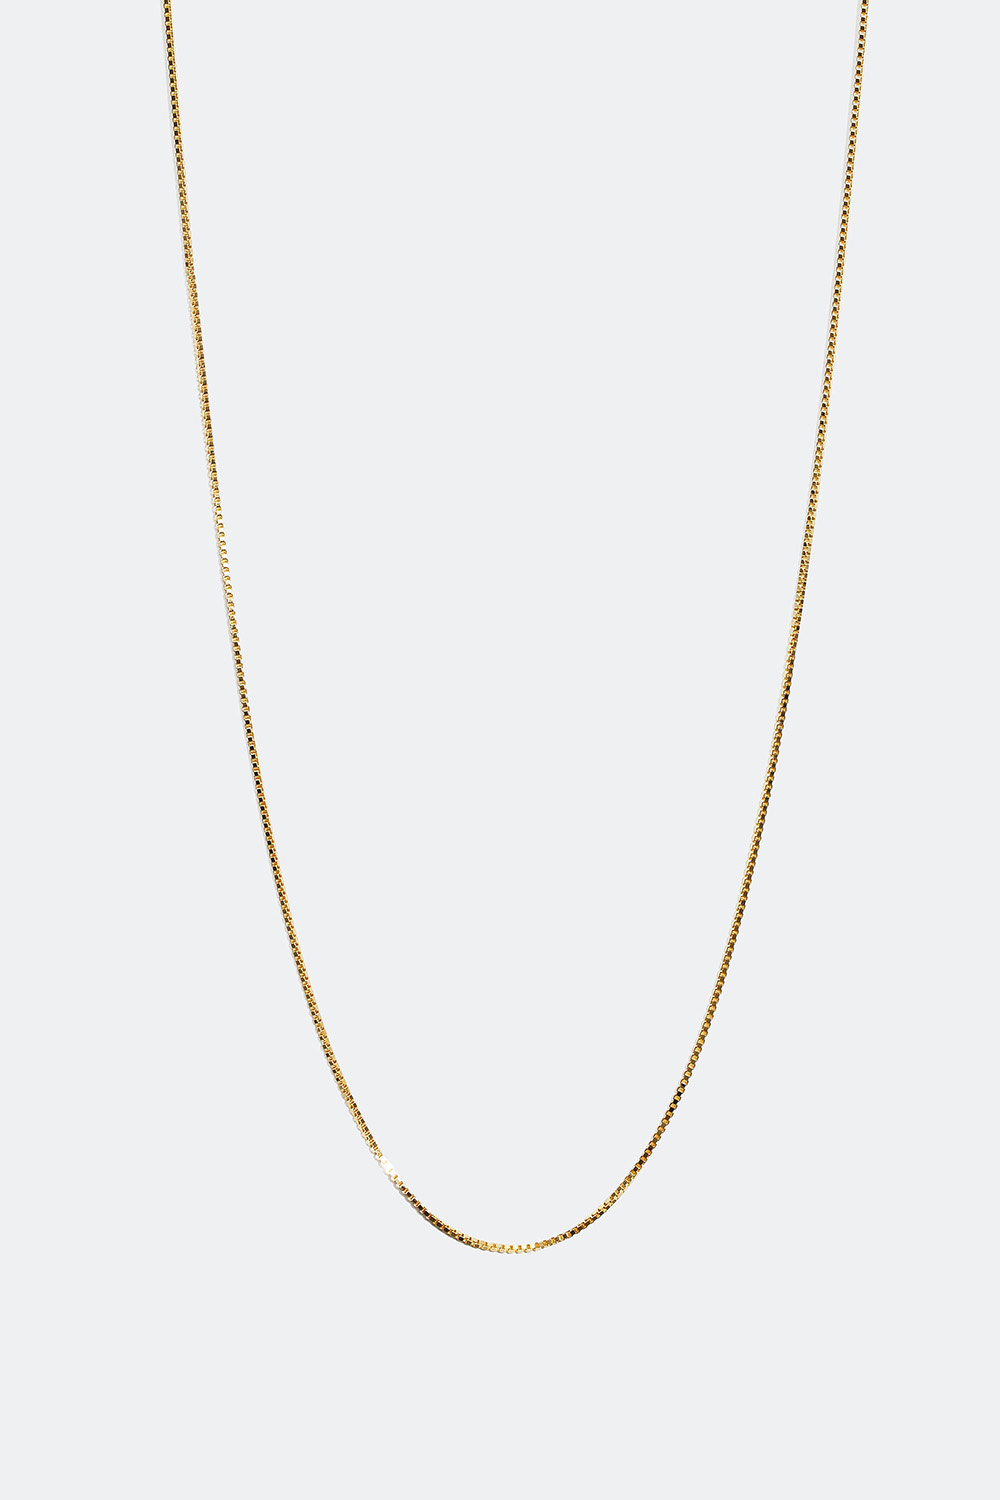 Veneziahalskæde forgyldt med 18 karat guld, 55 cm